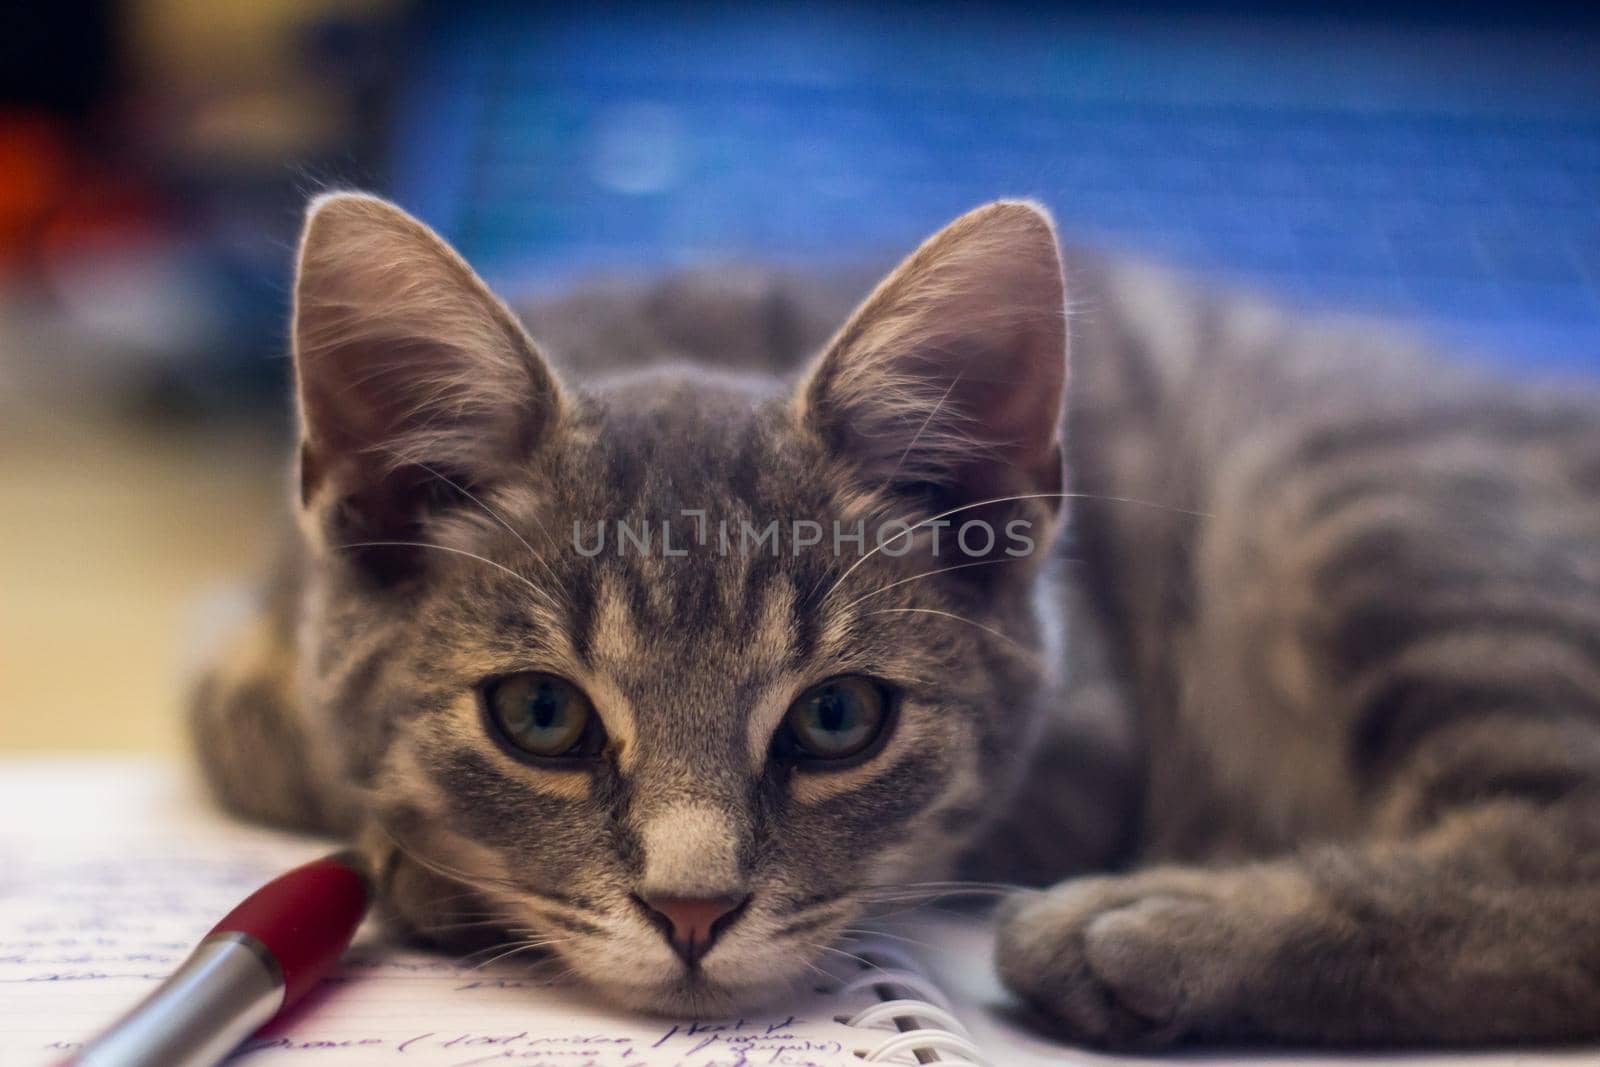 Closeup of an adorable fluffy gray kitten lying on a notebook